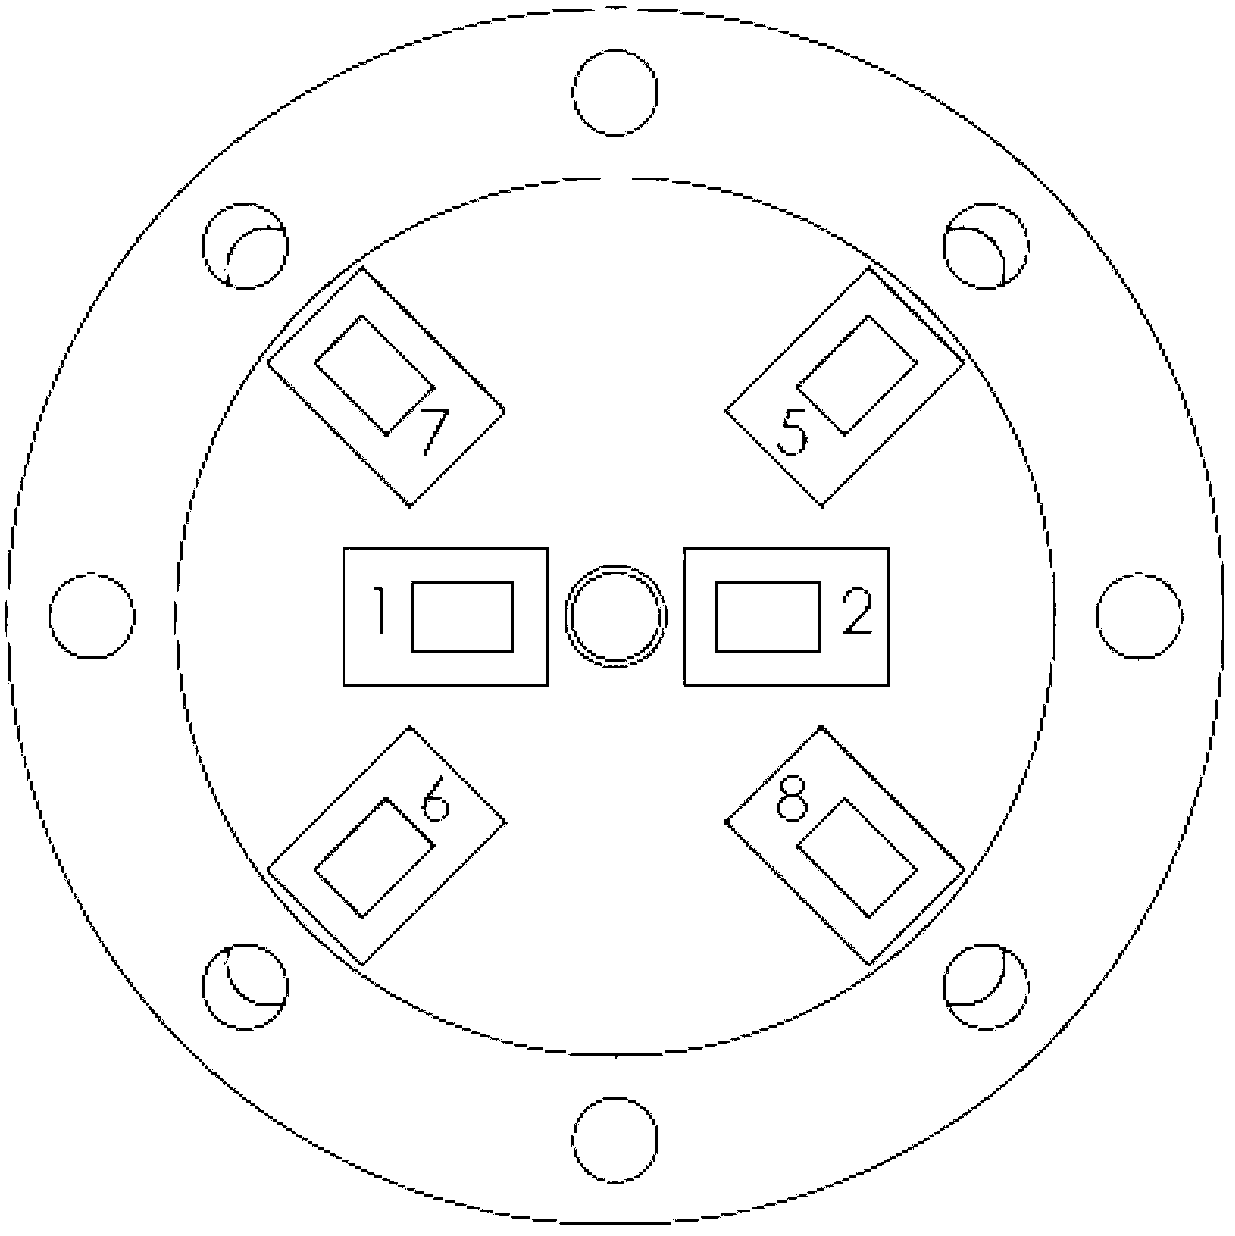 Button-type five-dimensional force sensor